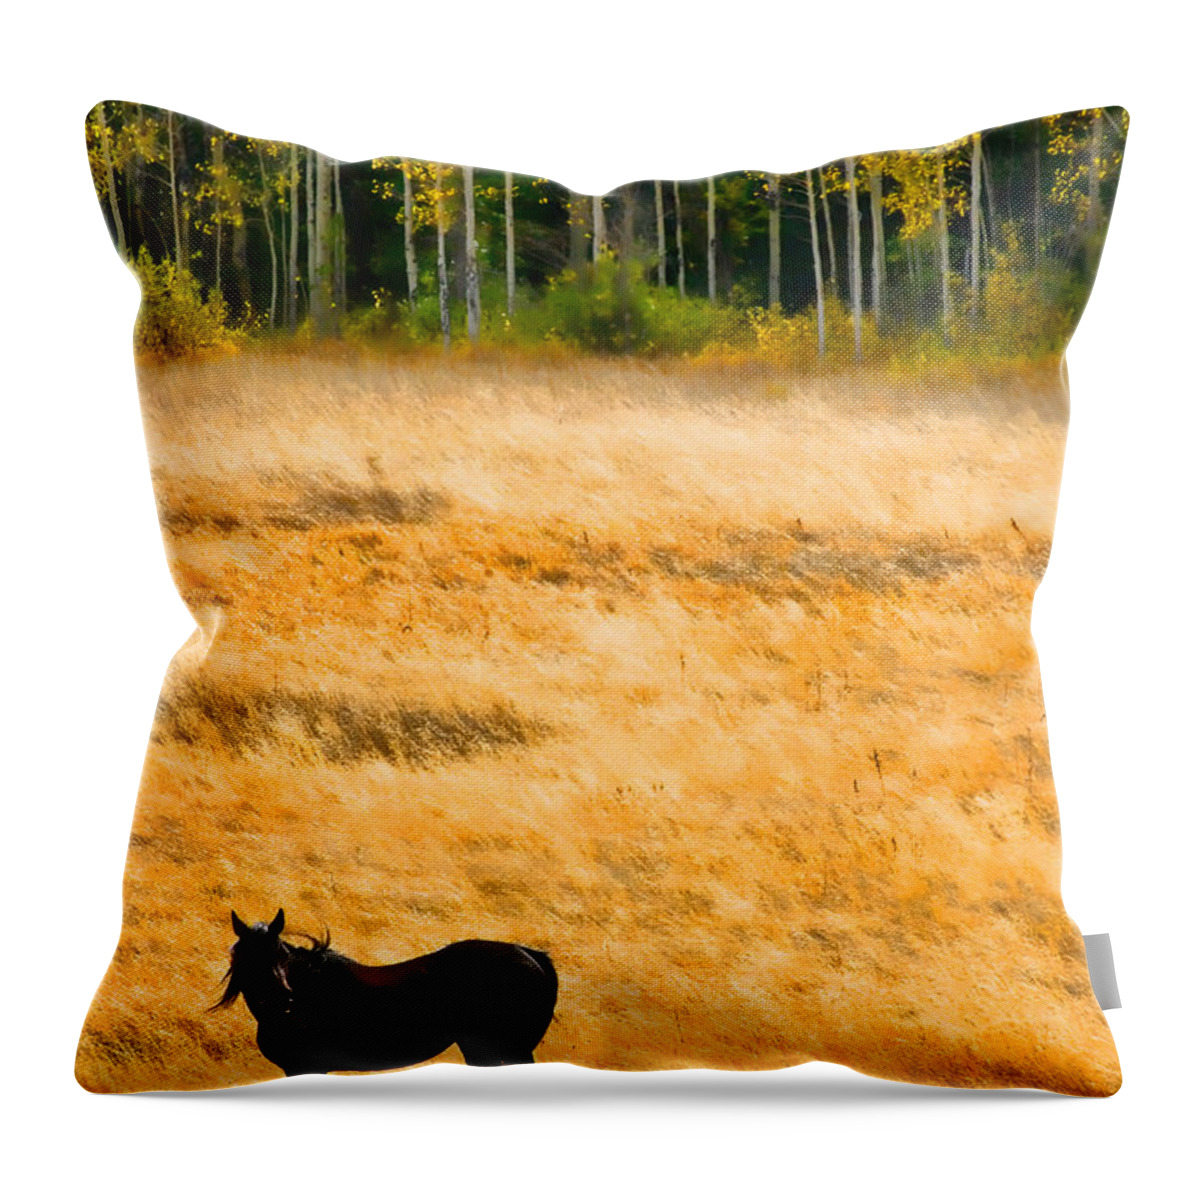 Boulder Throw Pillow featuring the photograph Rocky Mountain Autumn Graze by James BO Insogna